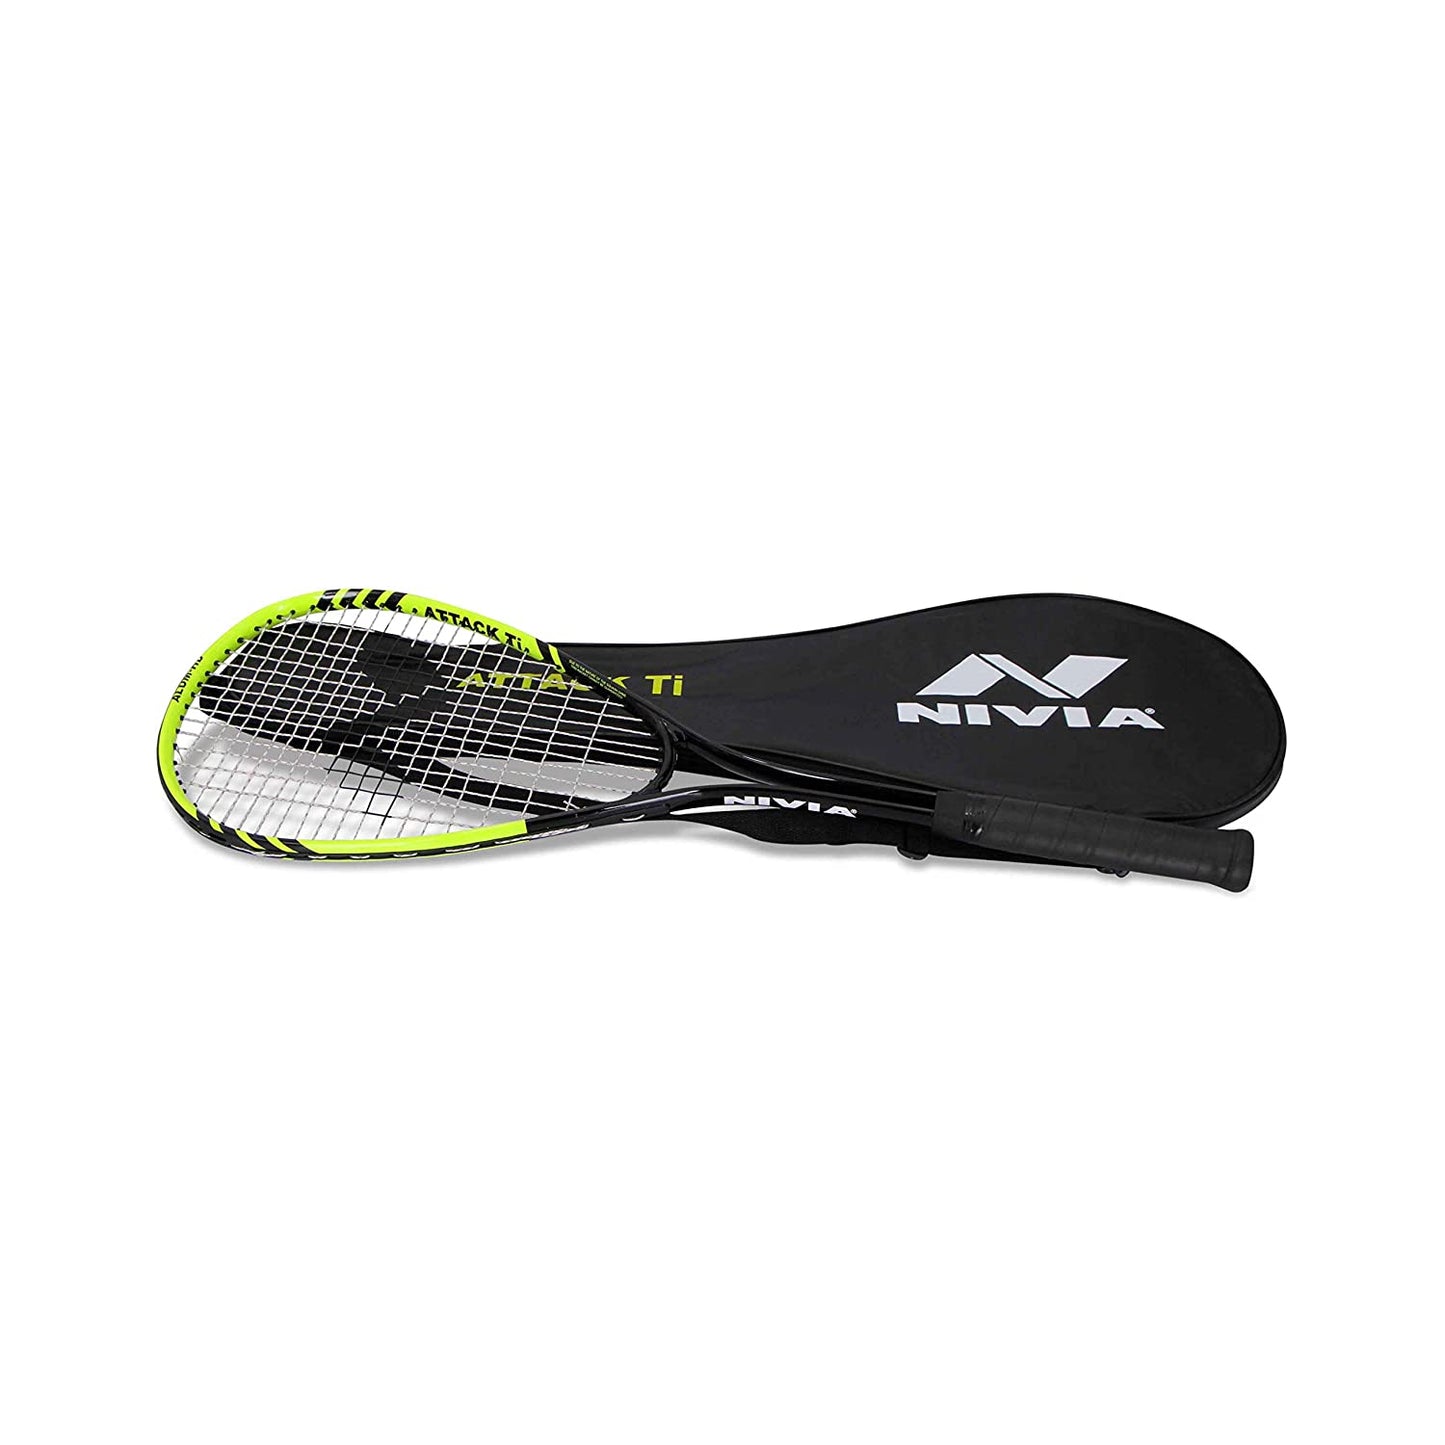 NIVIA Attack-Ti Squash Racquet (Green/Black) - Best Price online Prokicksports.com